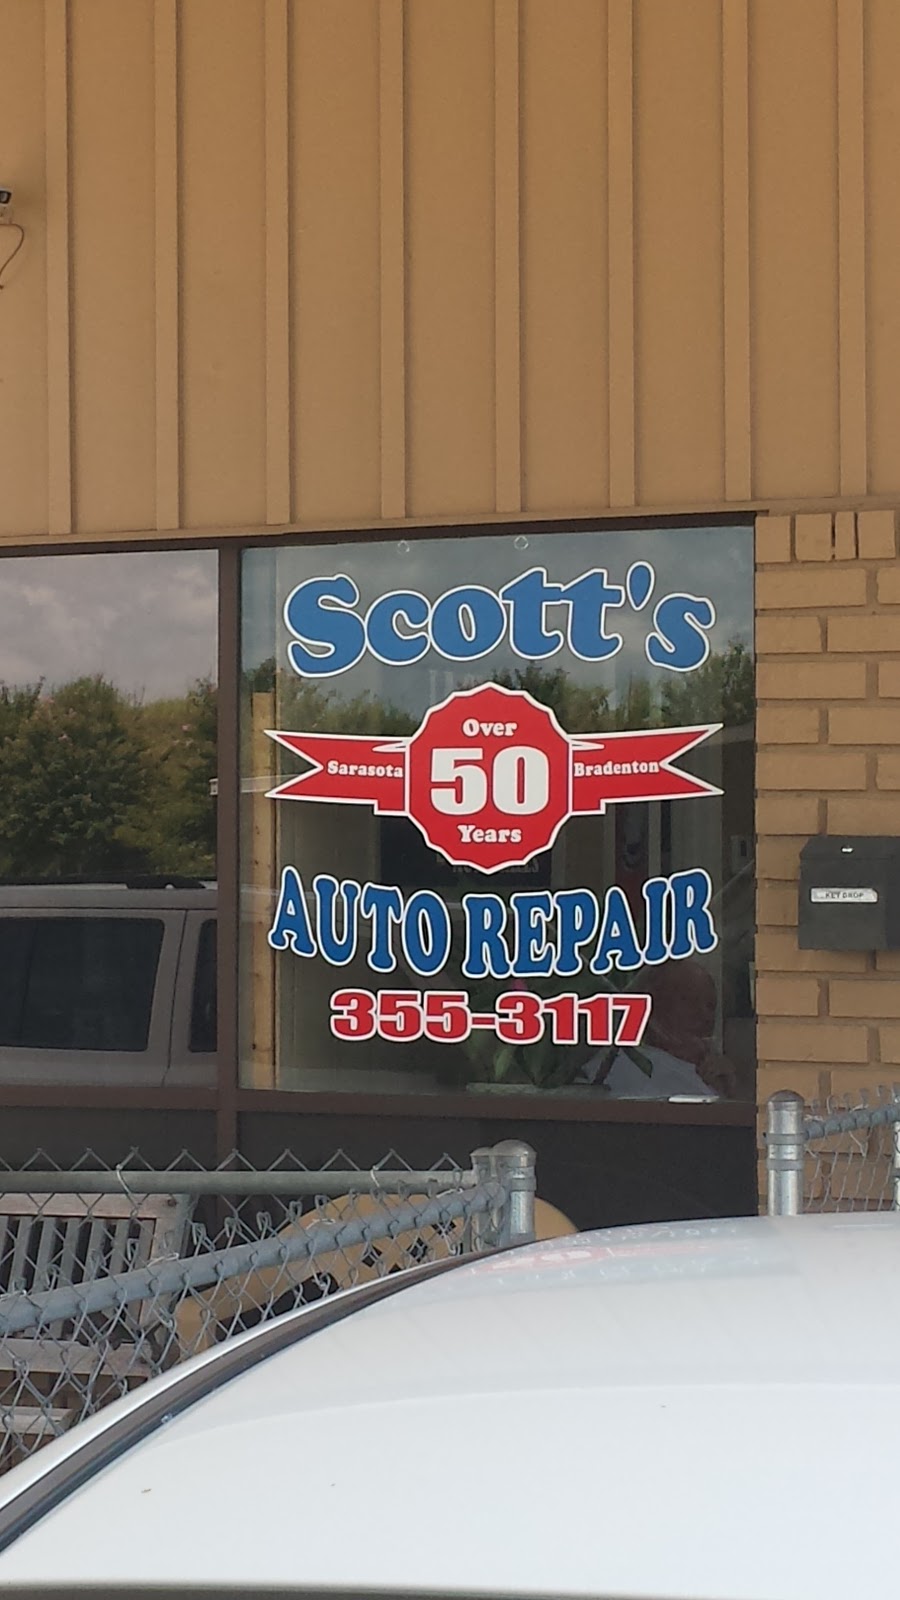 Scotts Auto Repair Inc | 6691 33rd St E, Sarasota, FL 34243, USA | Phone: (941) 355-3117